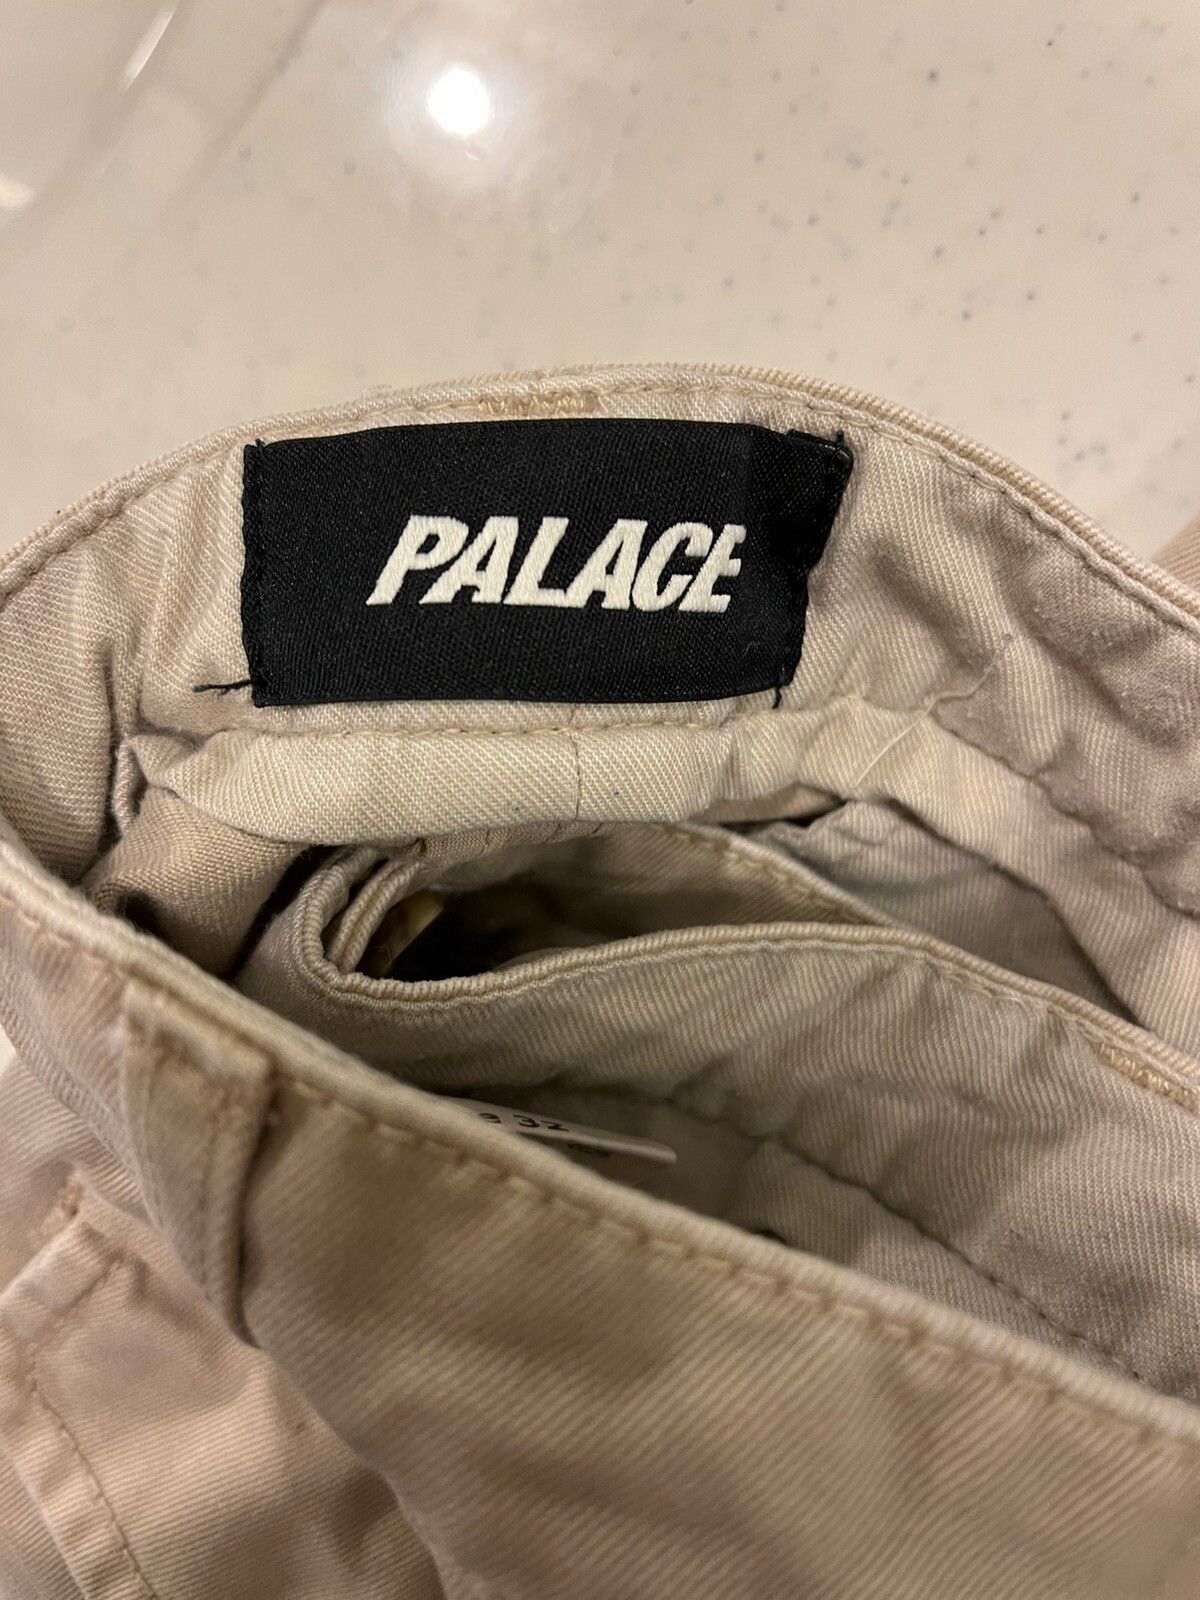 Palace Palace Pants Size US 32 / EU 48 - 3 Thumbnail